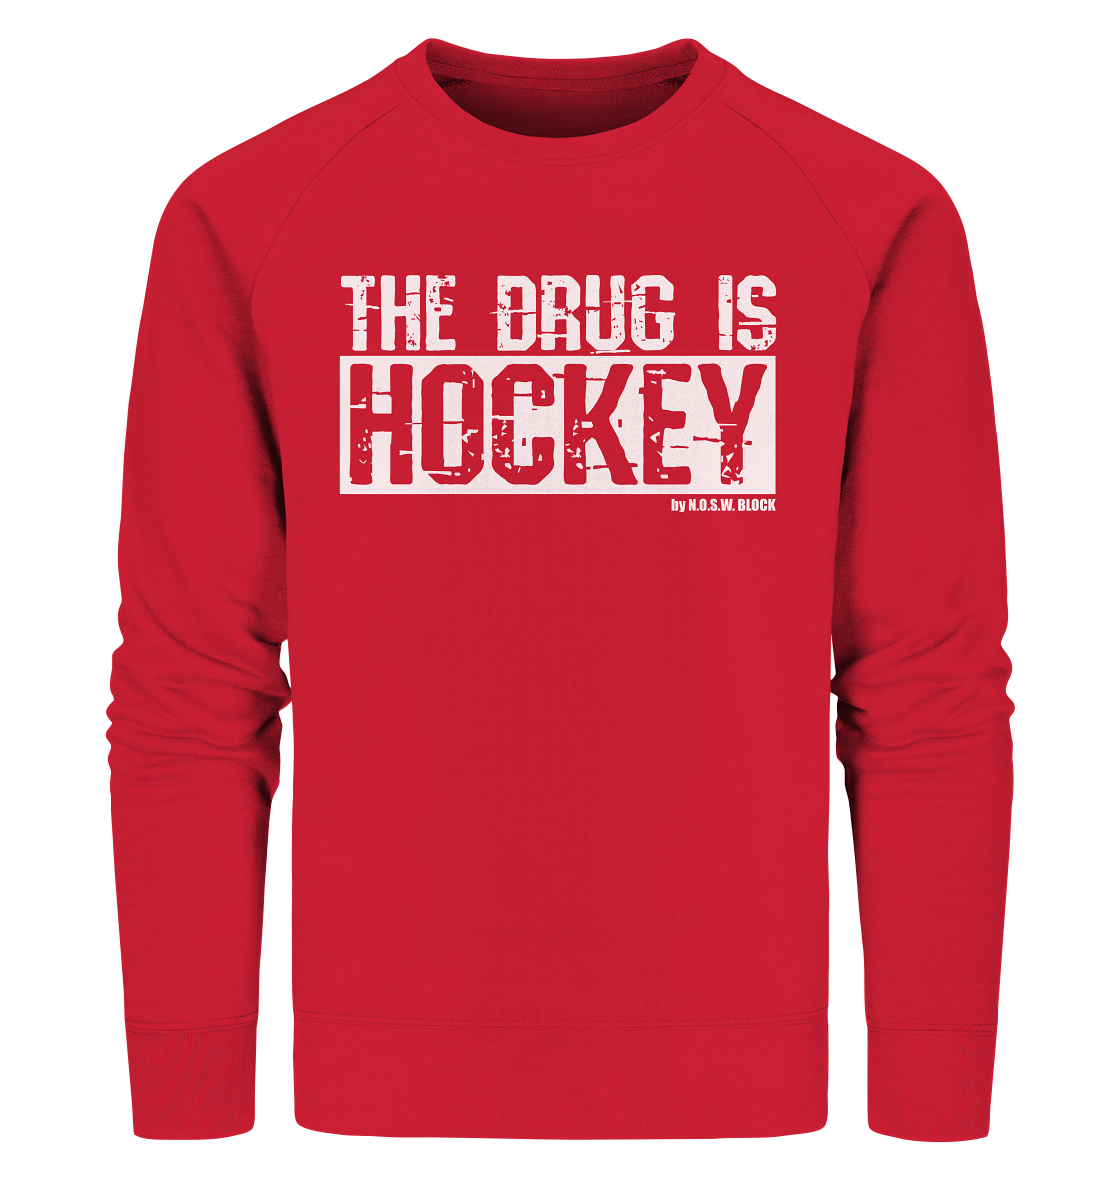 N.O.S.W. BLOCK Fanblock Sweater "THE DRUG IS HOCKEY" Männer Organic Sweatshirt rot